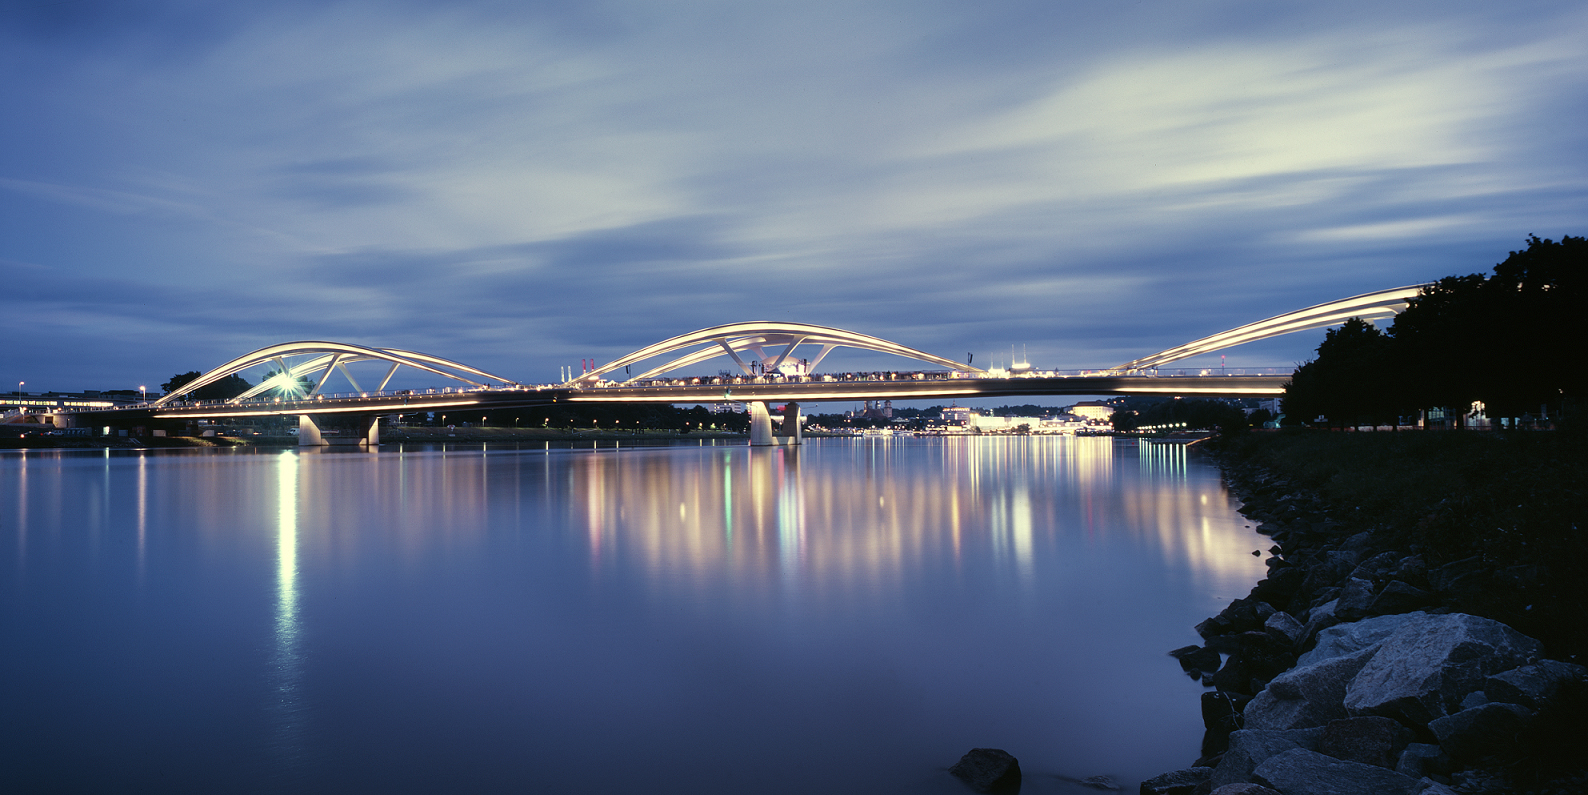 Marc Mimram - Pont de Linz - Linz Bridge - Autriche - Austria ©Erieta Attali